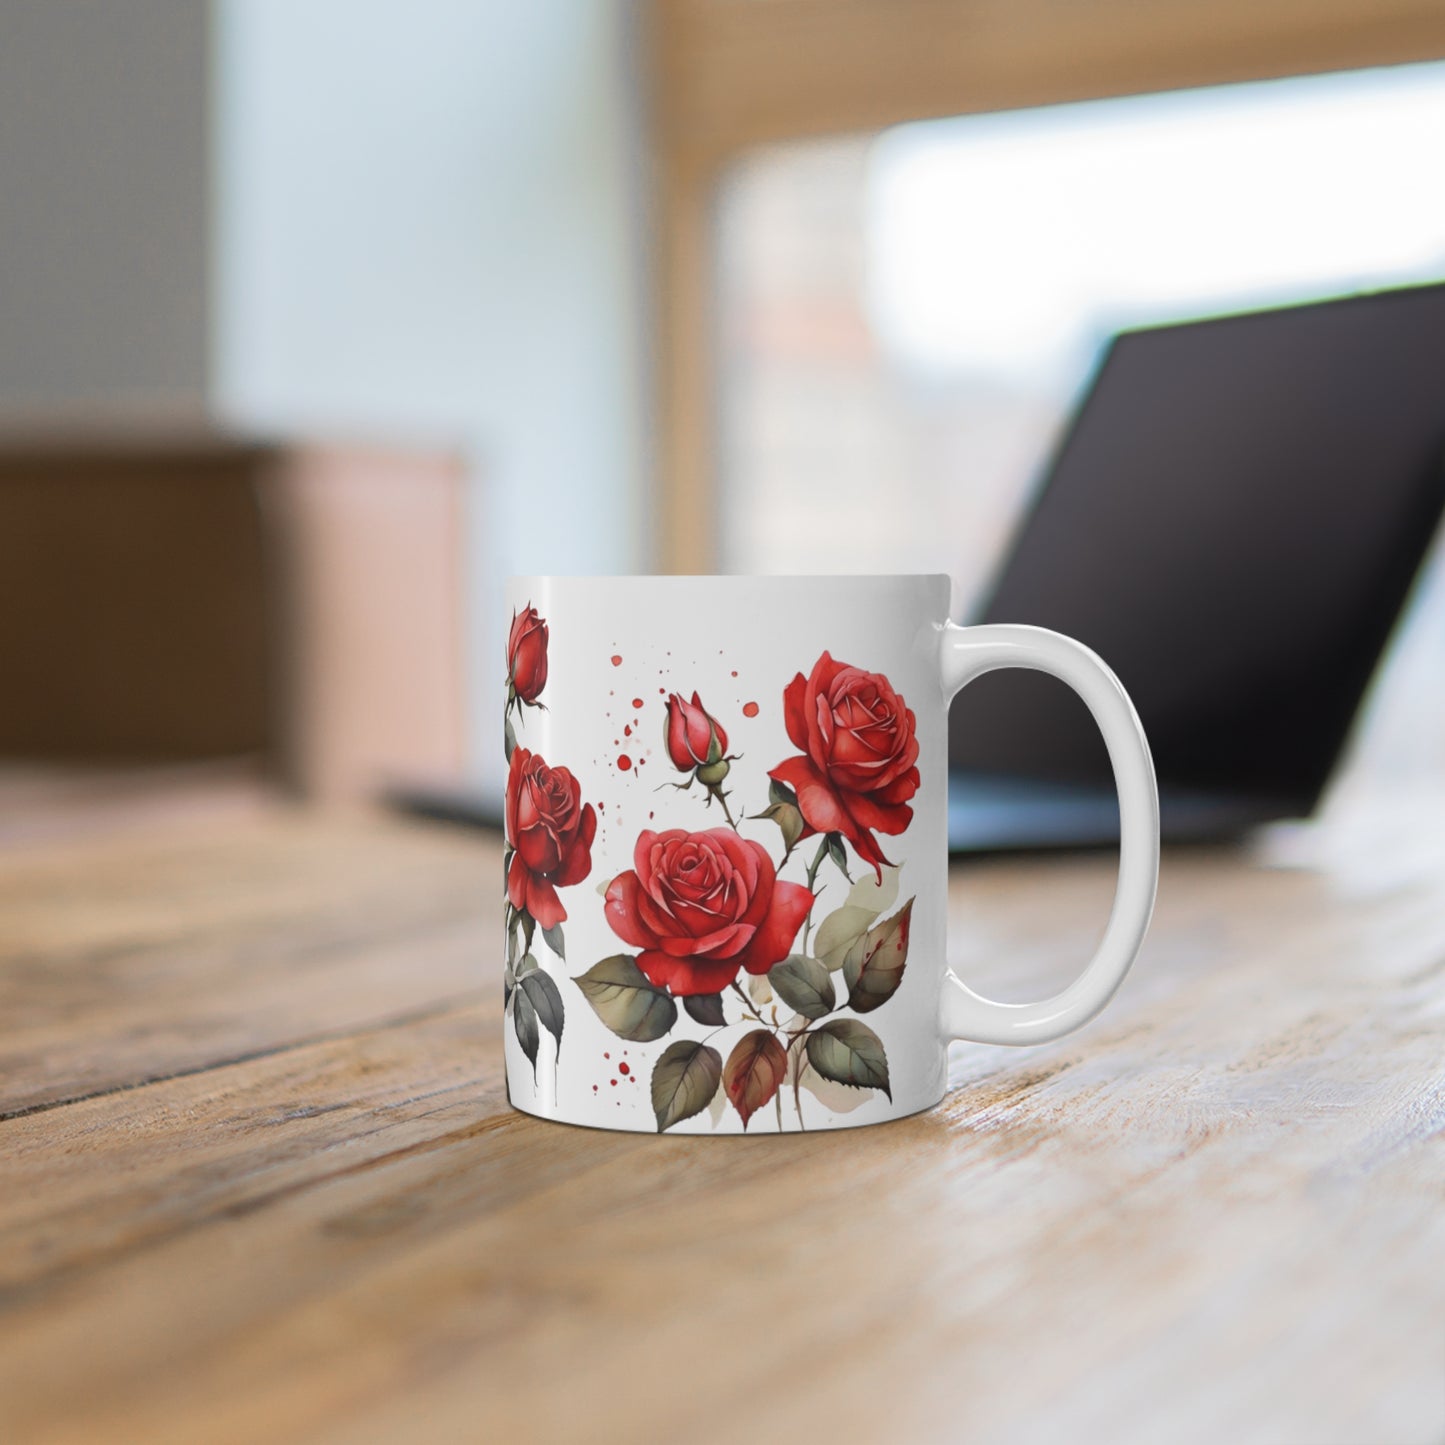 Water Colour Red Roses Art Mug - Ceramic Coffee Mug 11oz